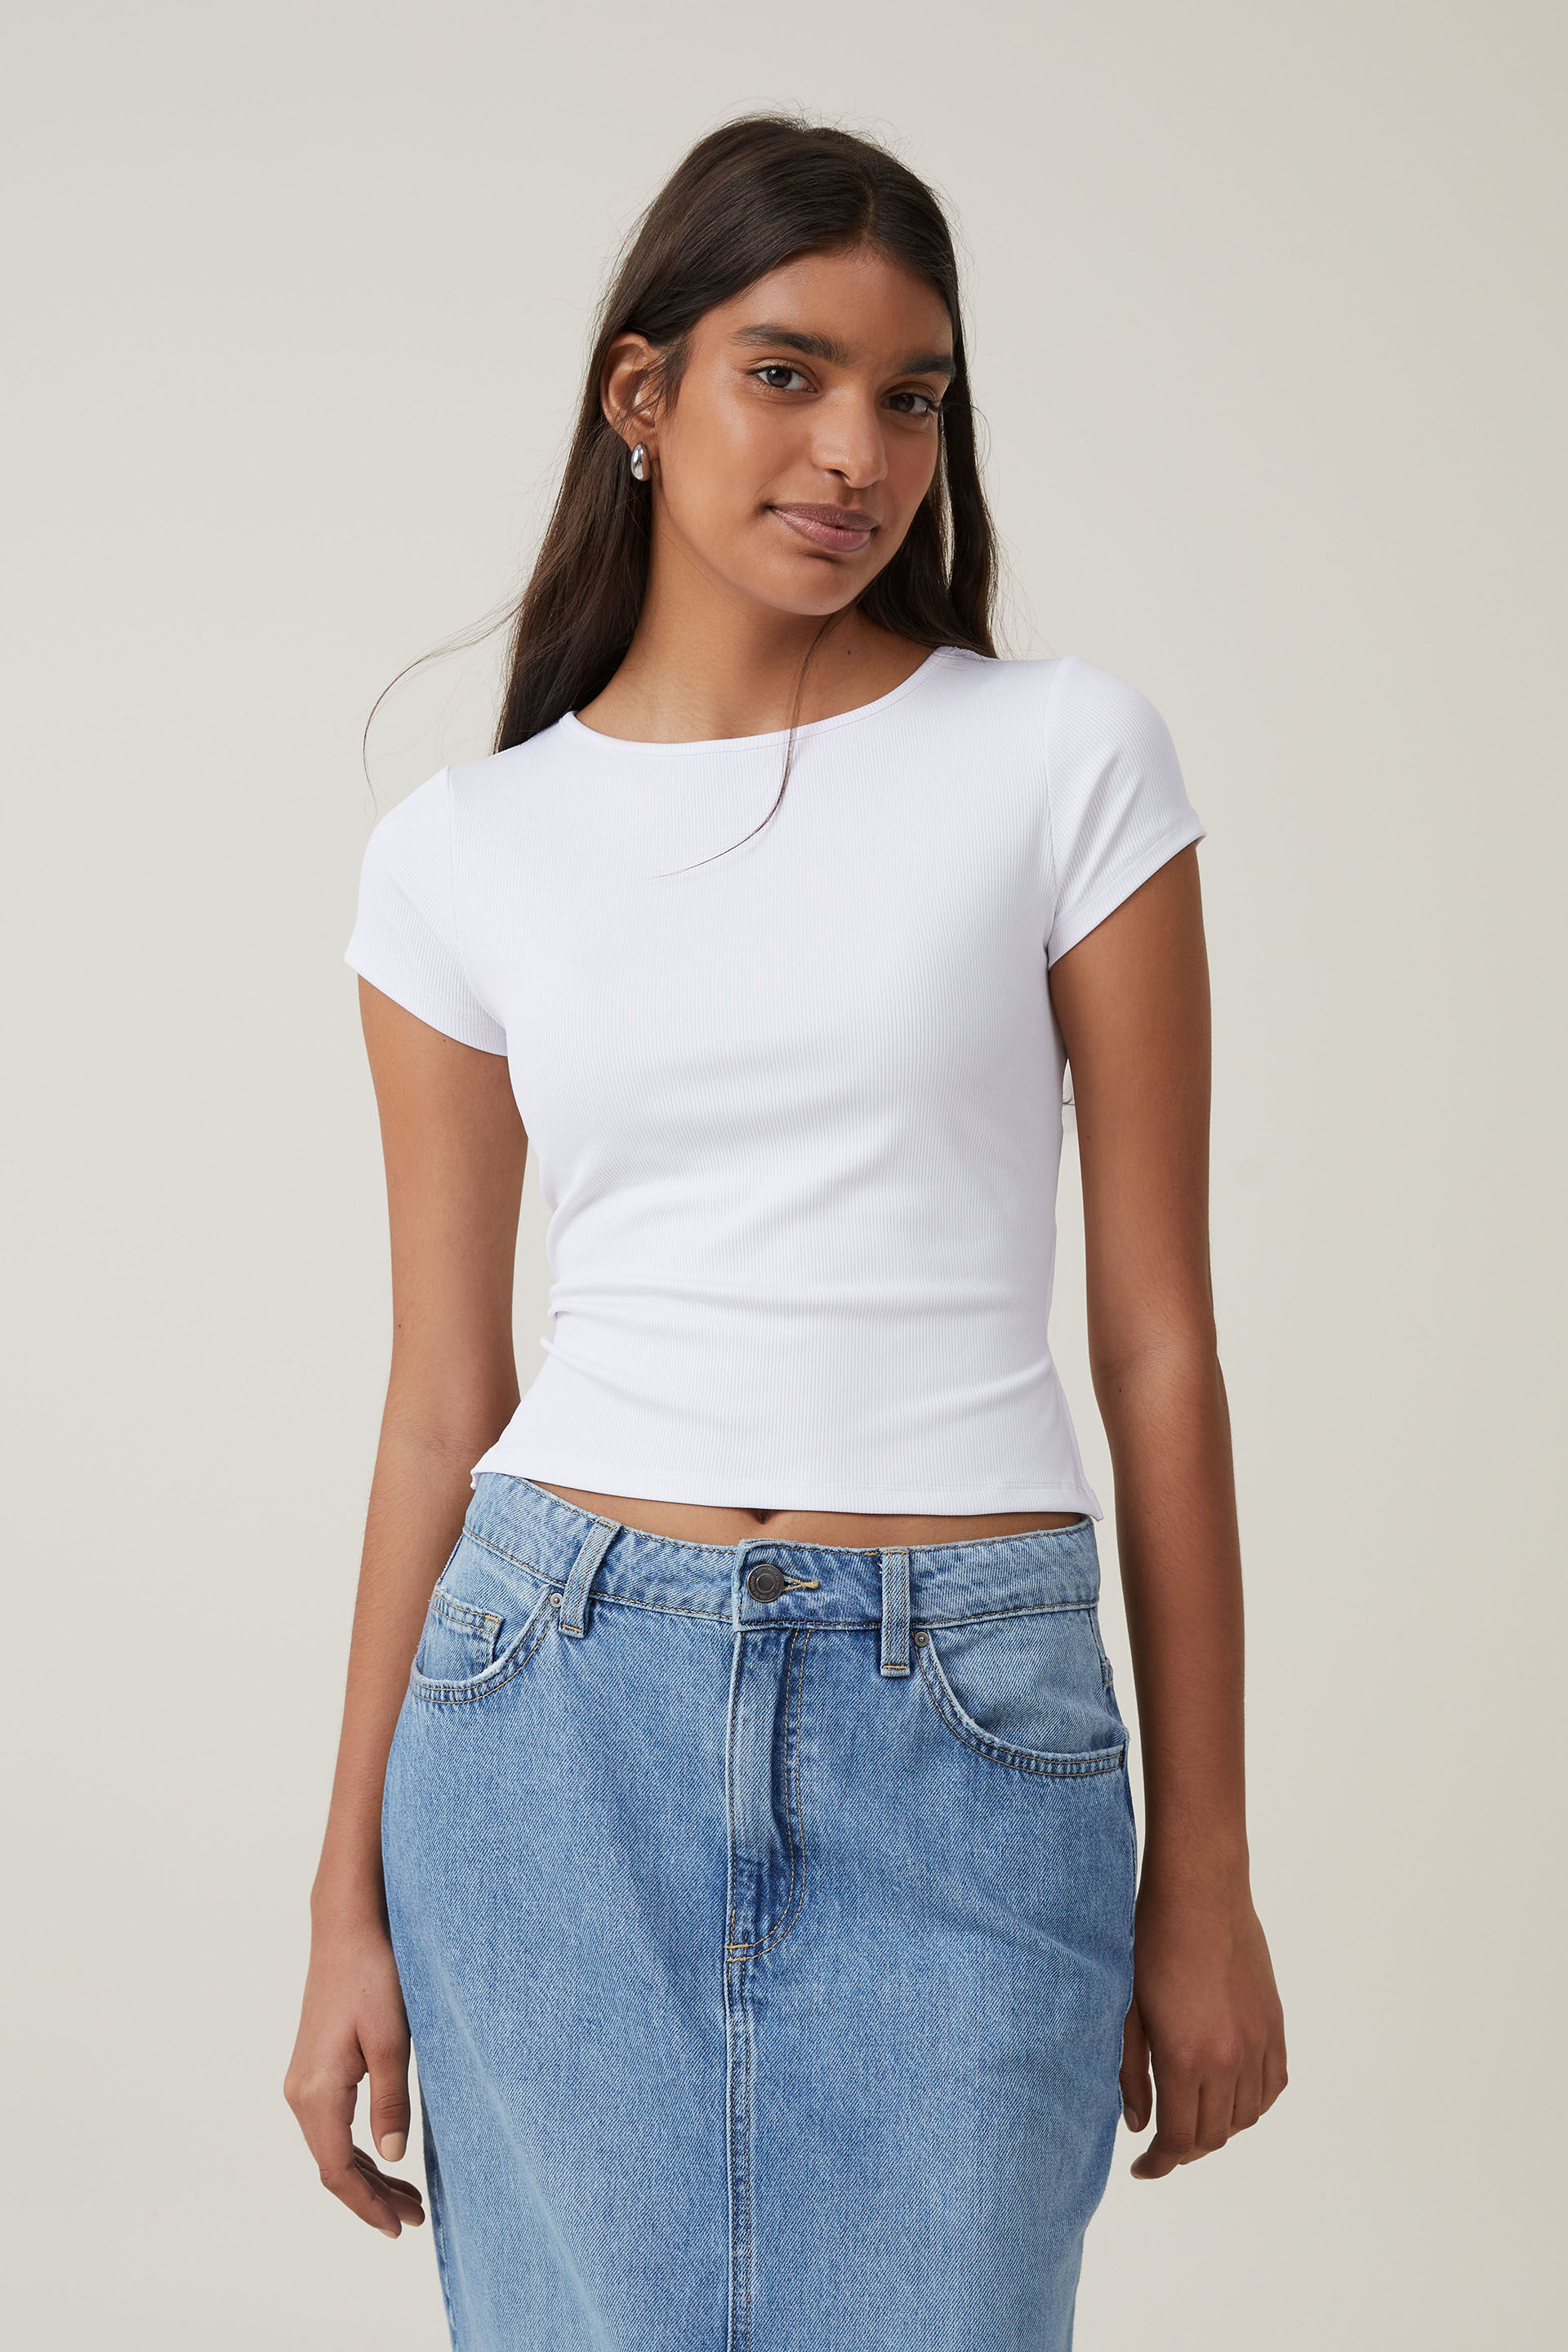 Cotton On Women - Romy Open Back Cap Sleeve Top - White